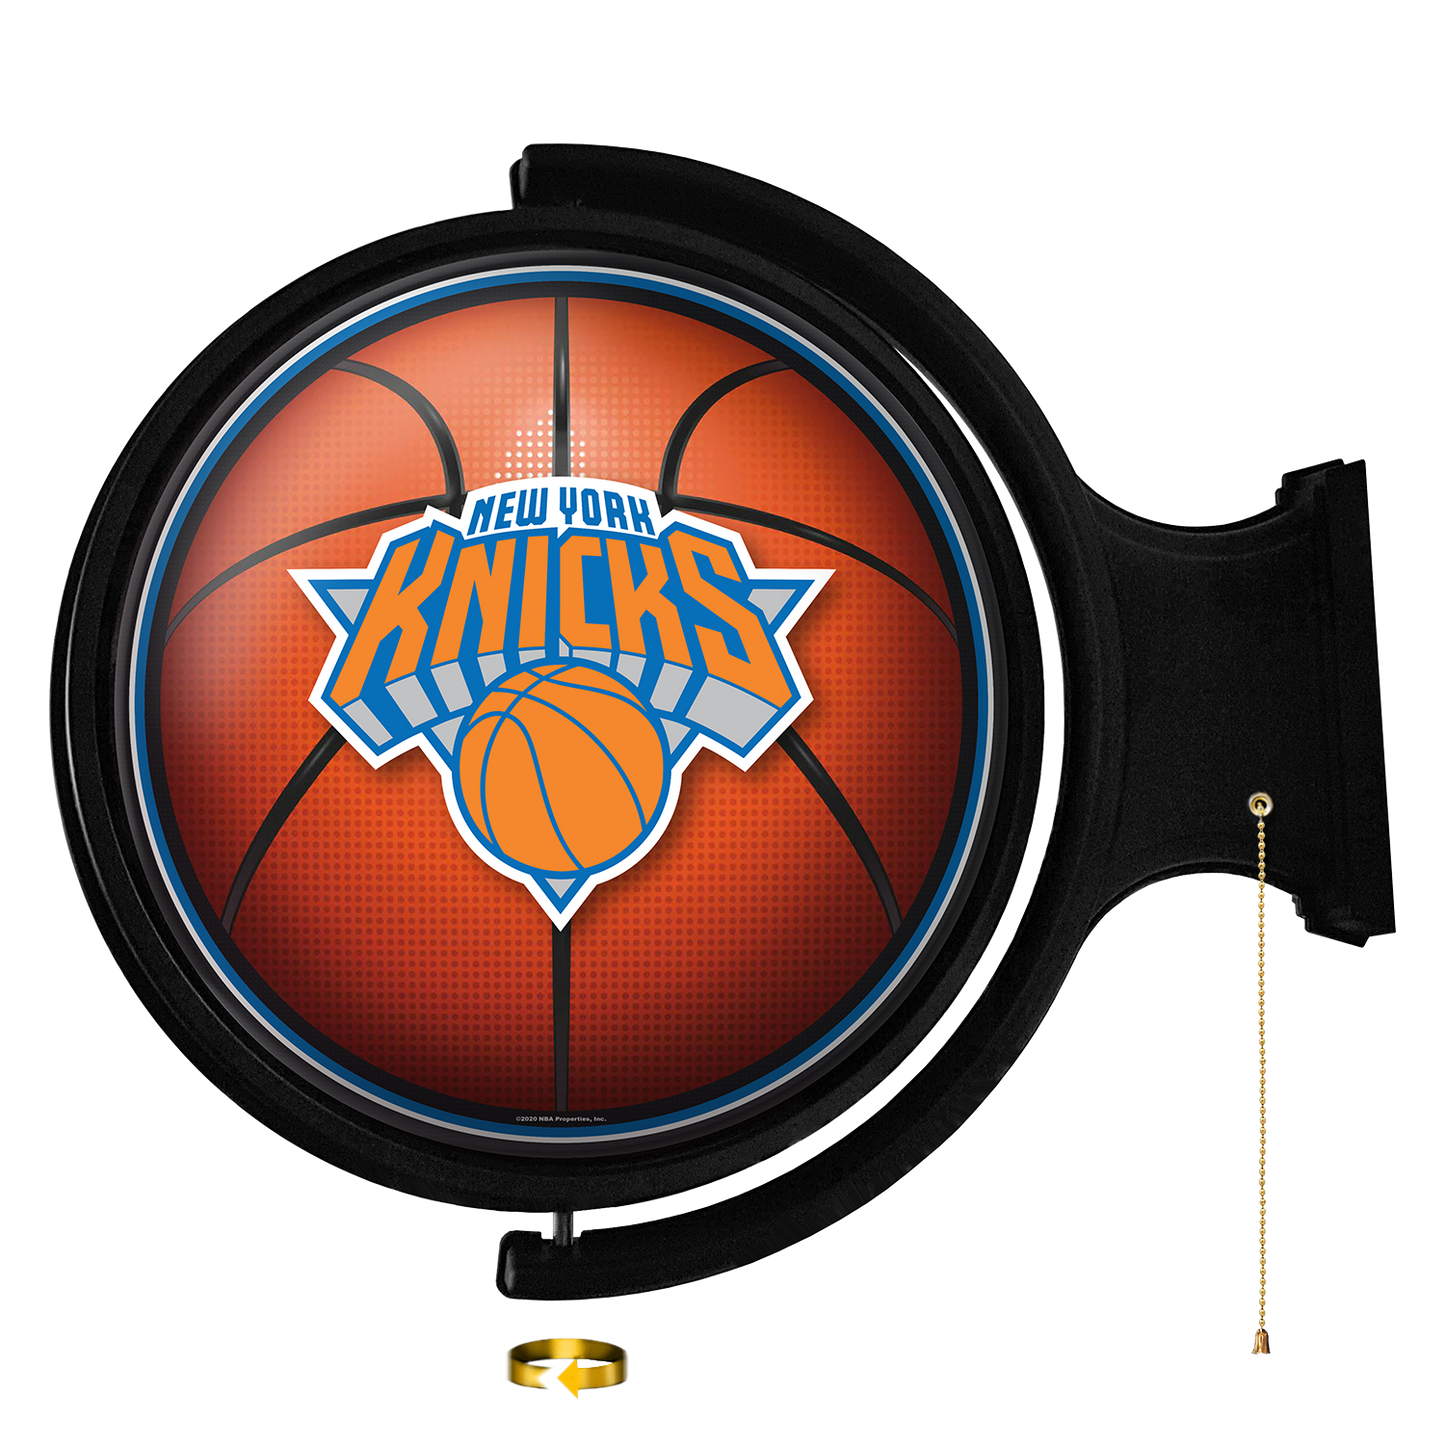 New York Knicks Round Basketball Rotating Wall Sign